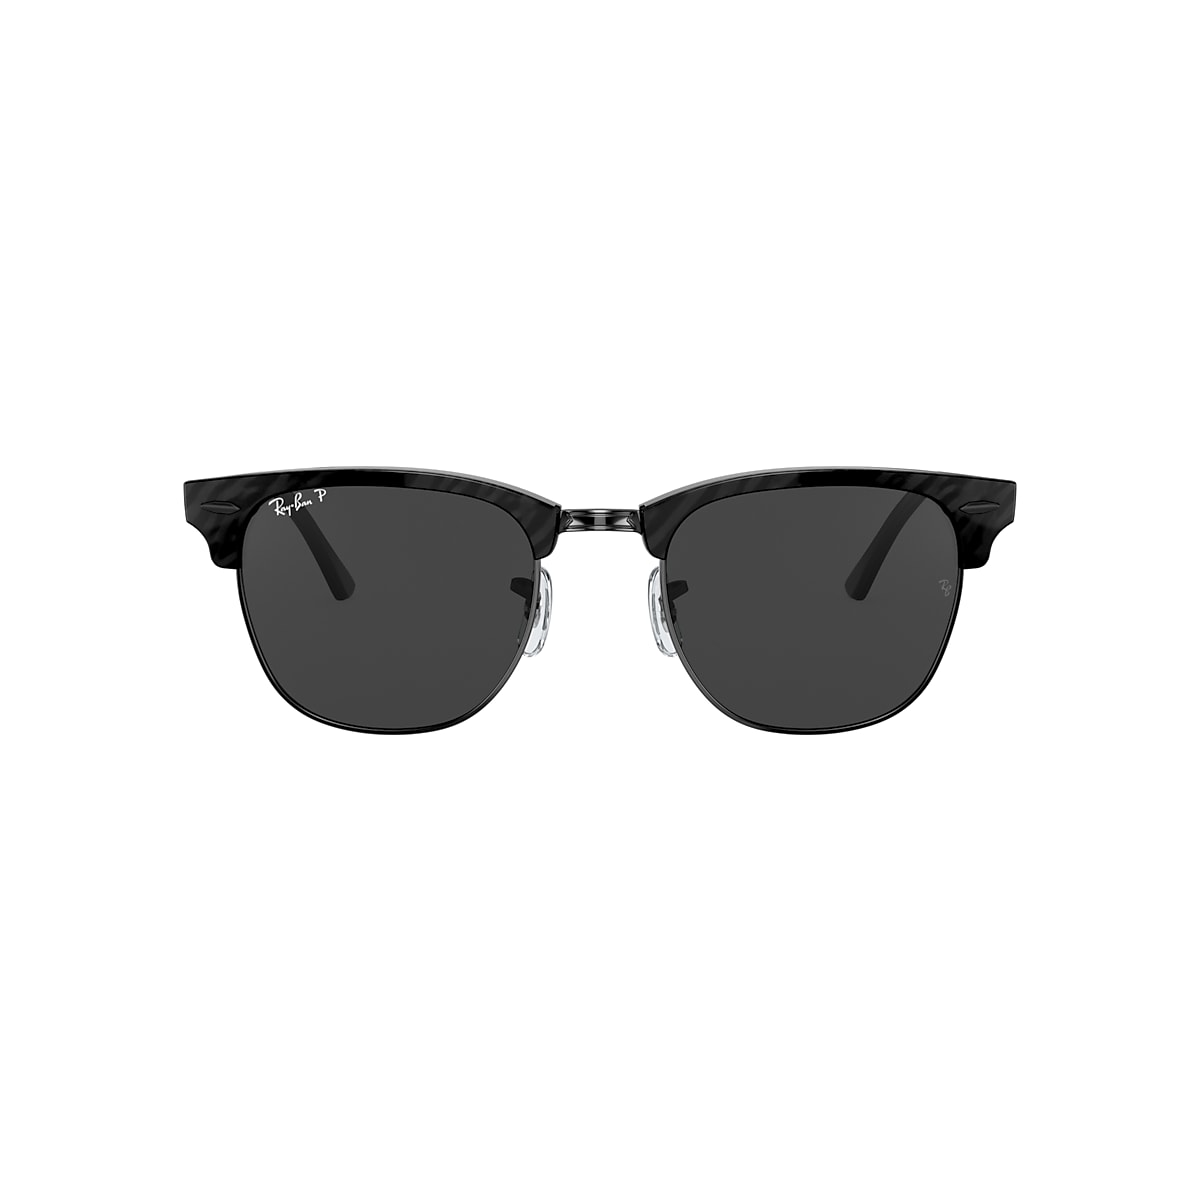 RB3016 Clubmaster Classic 51 Black & Black Polarized Sunglasses | Sunglass Hut USA